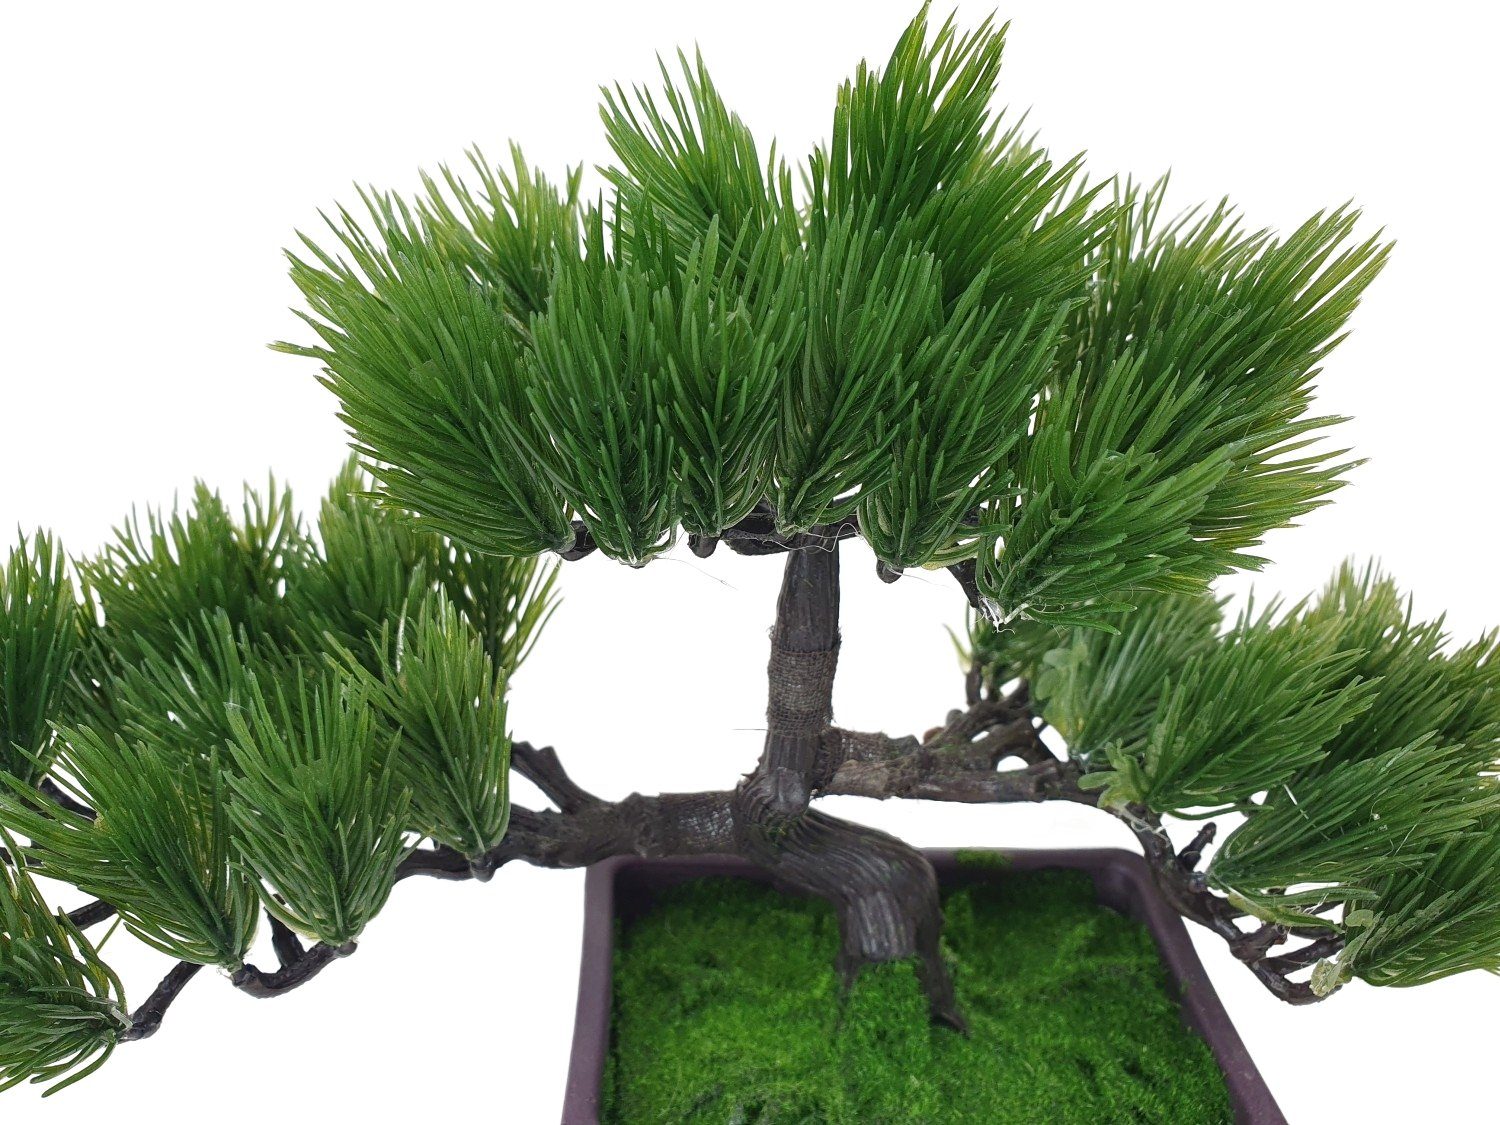 Baum Künstlicher Bonsai Kunstbonsai Topf im 21cm, sesua, Höhe cm 21